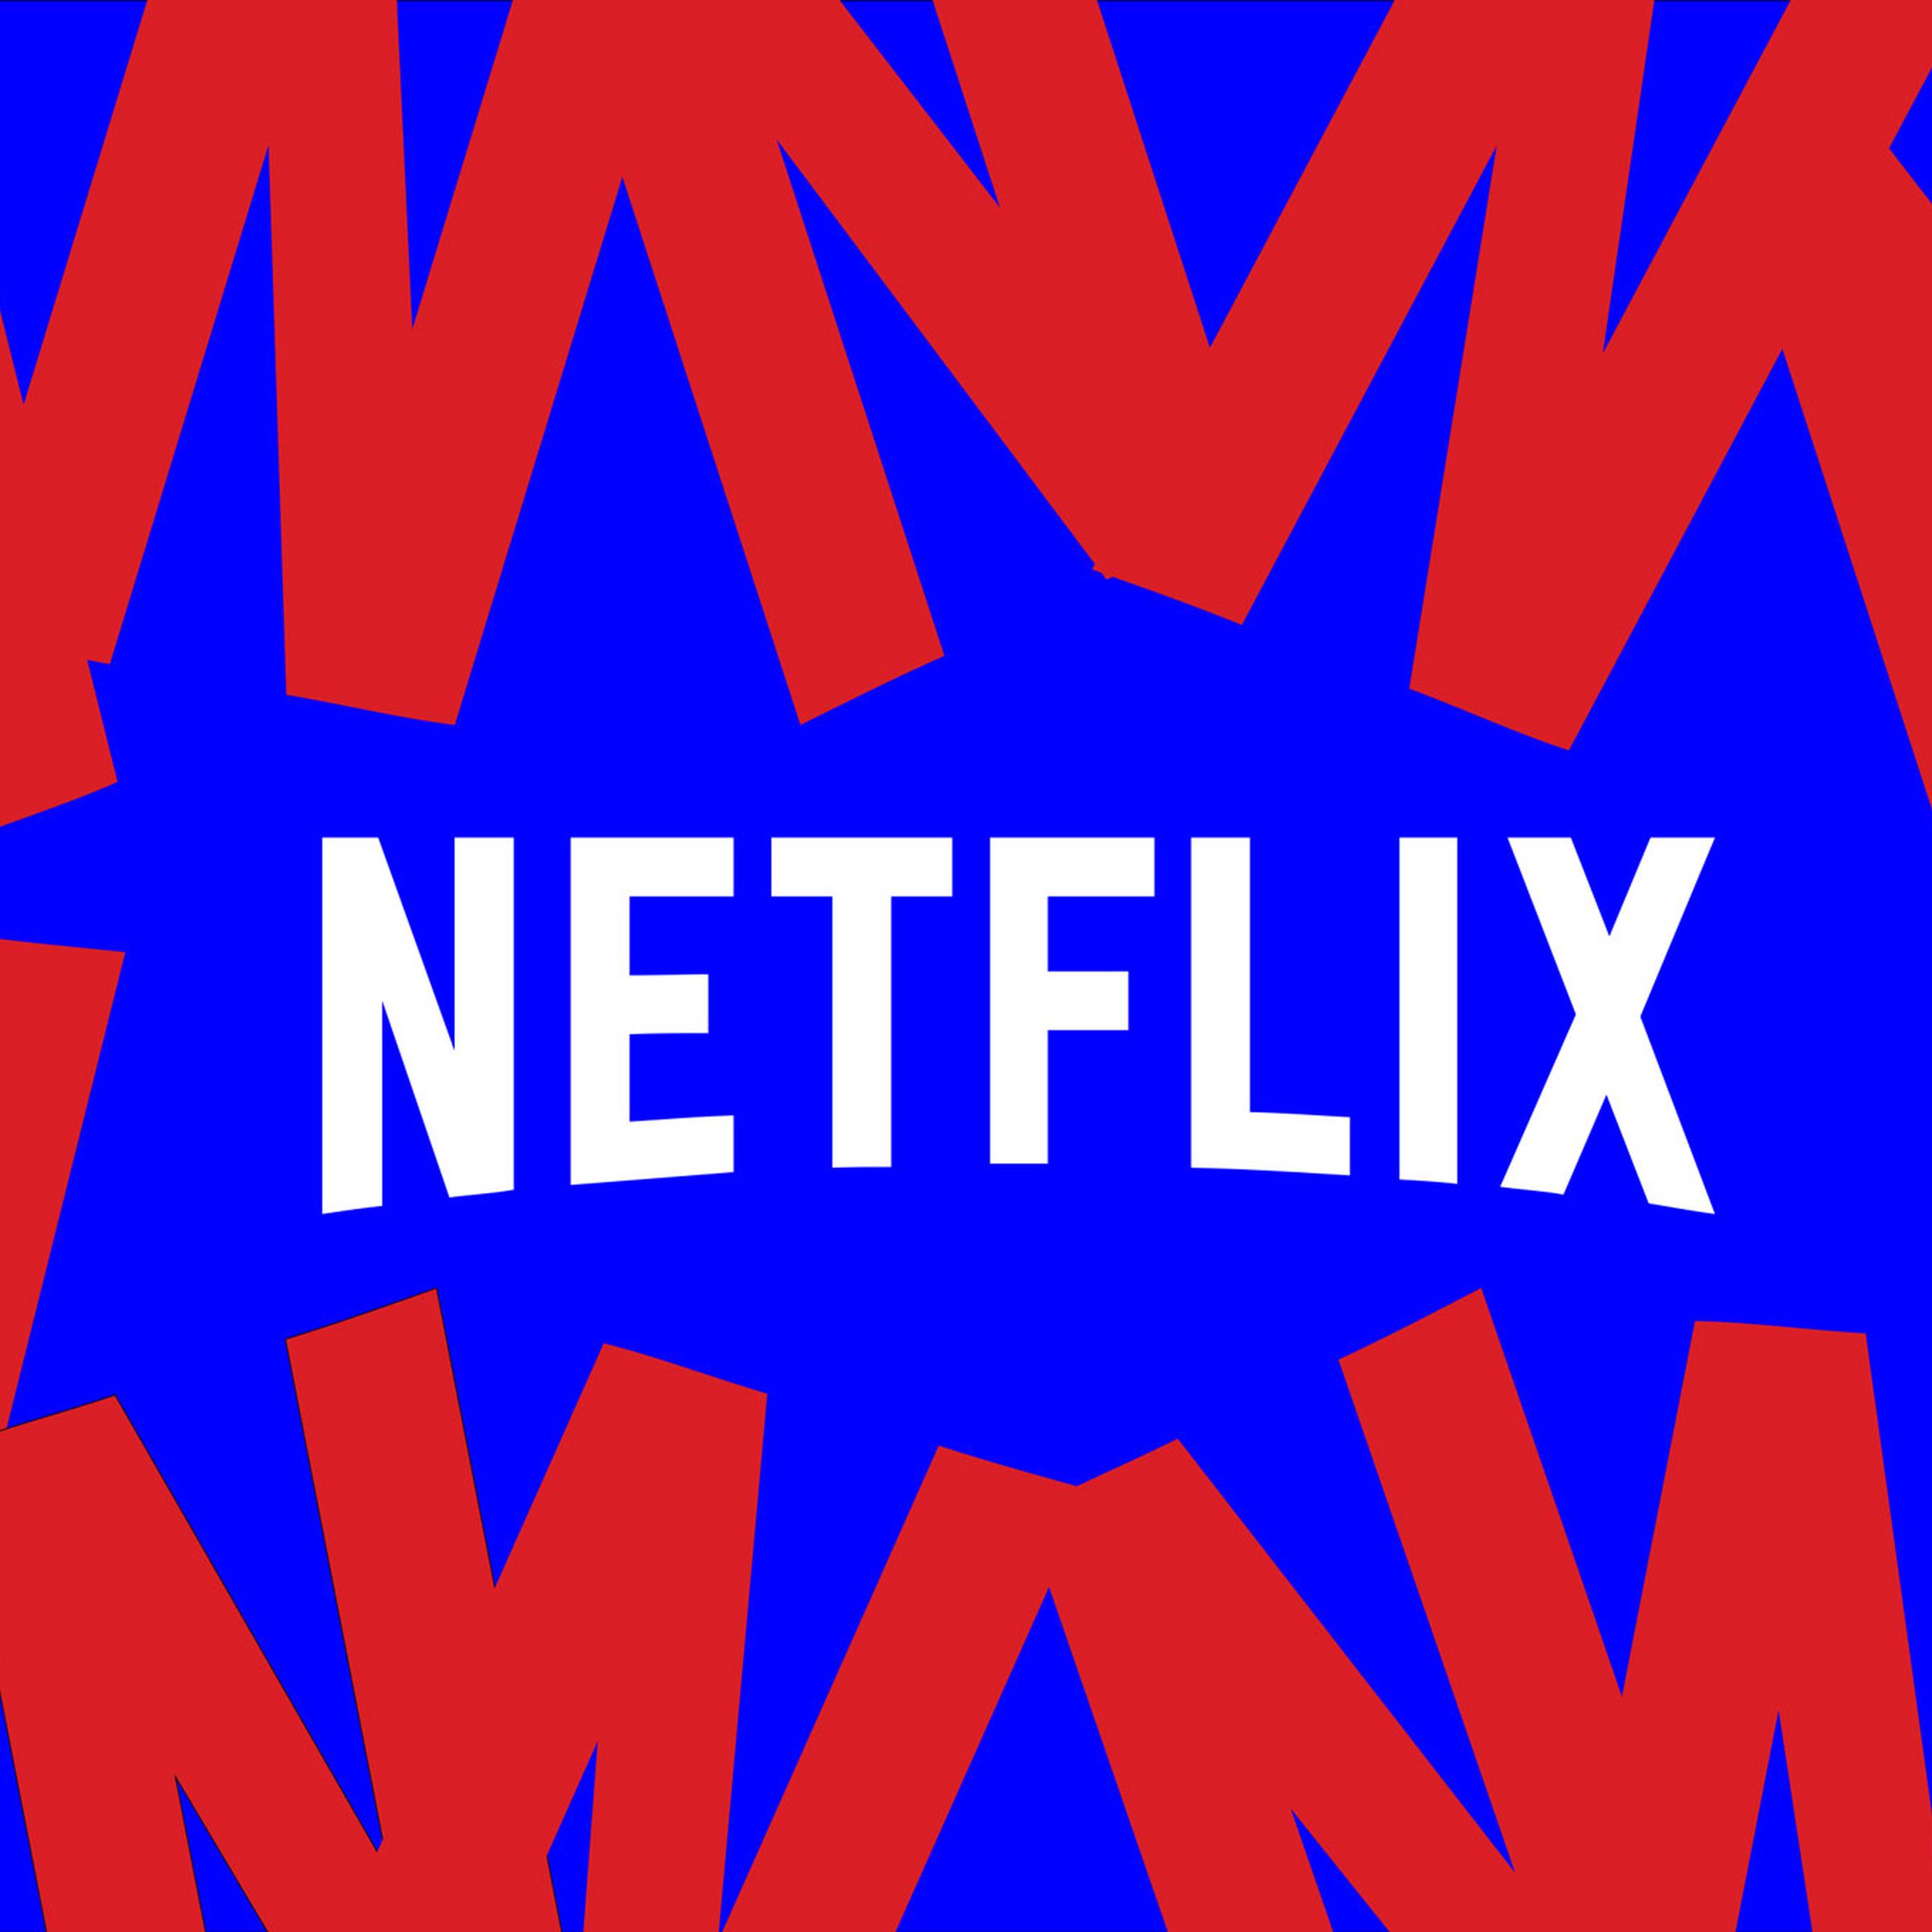 Netflix logo illustration